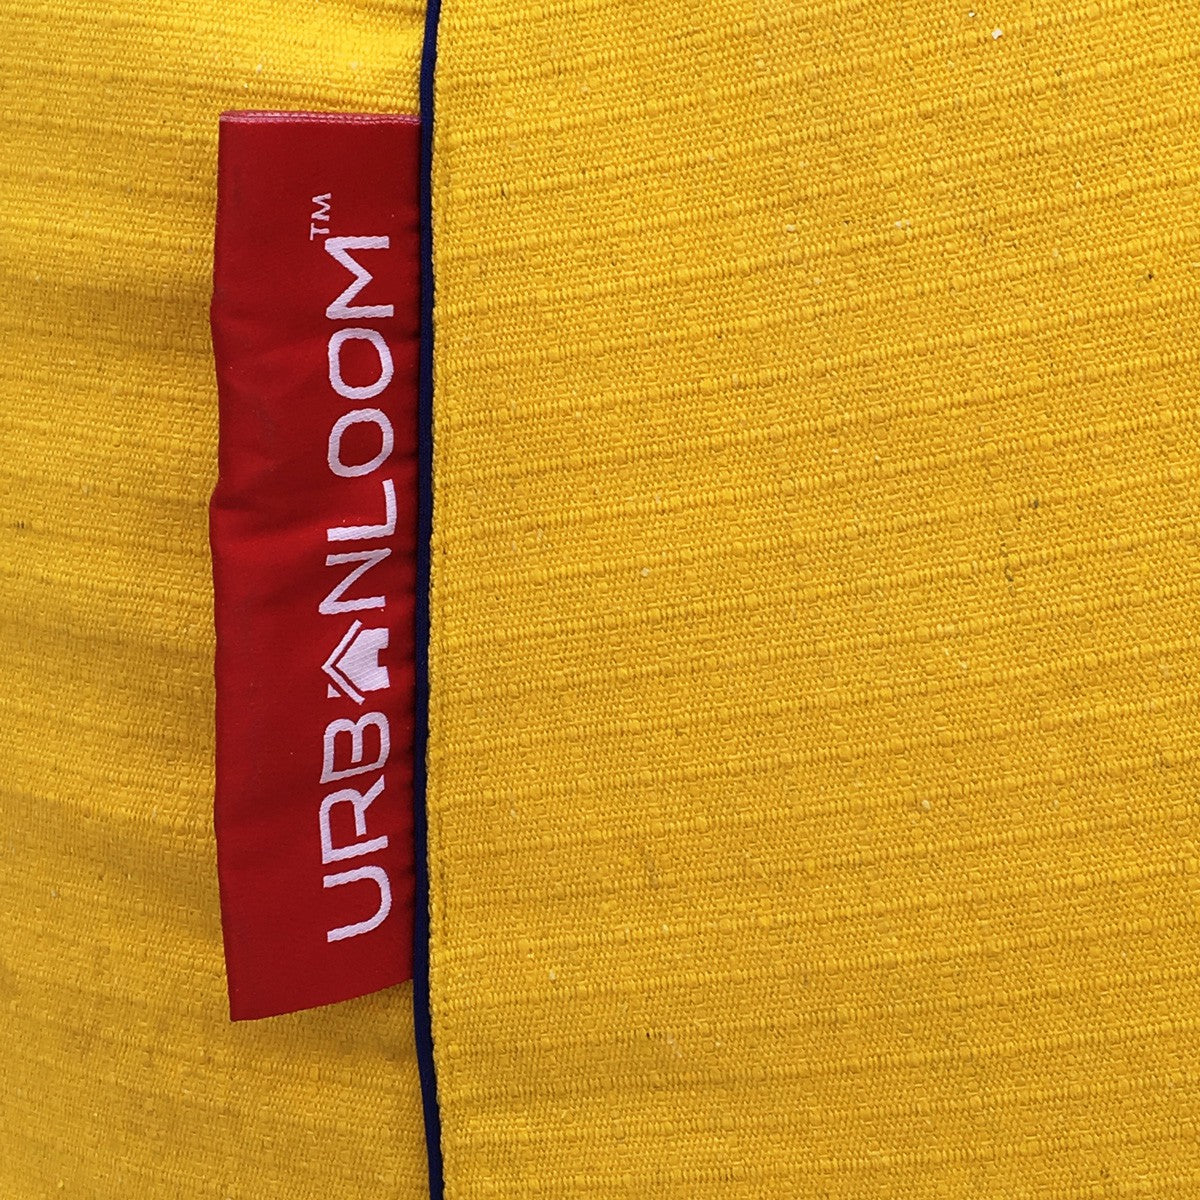 Cotton handloom mobile bean bag Holder (Yellow)